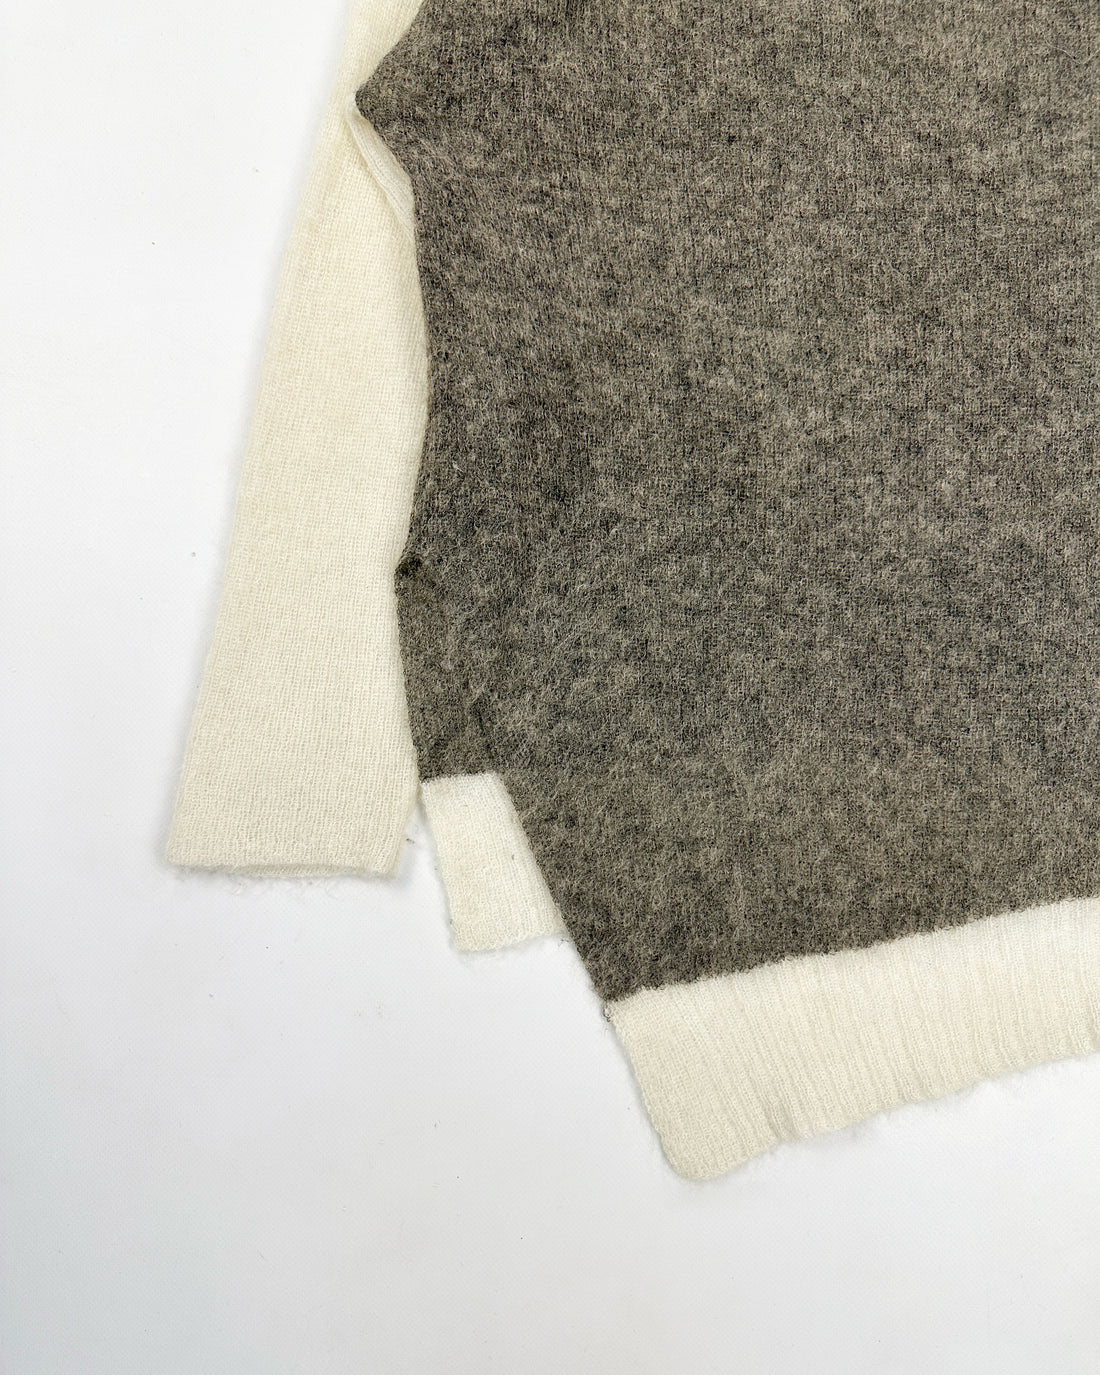 Helmut Lang Mohair Colorblock Alpaca Blend Sweater 2000's